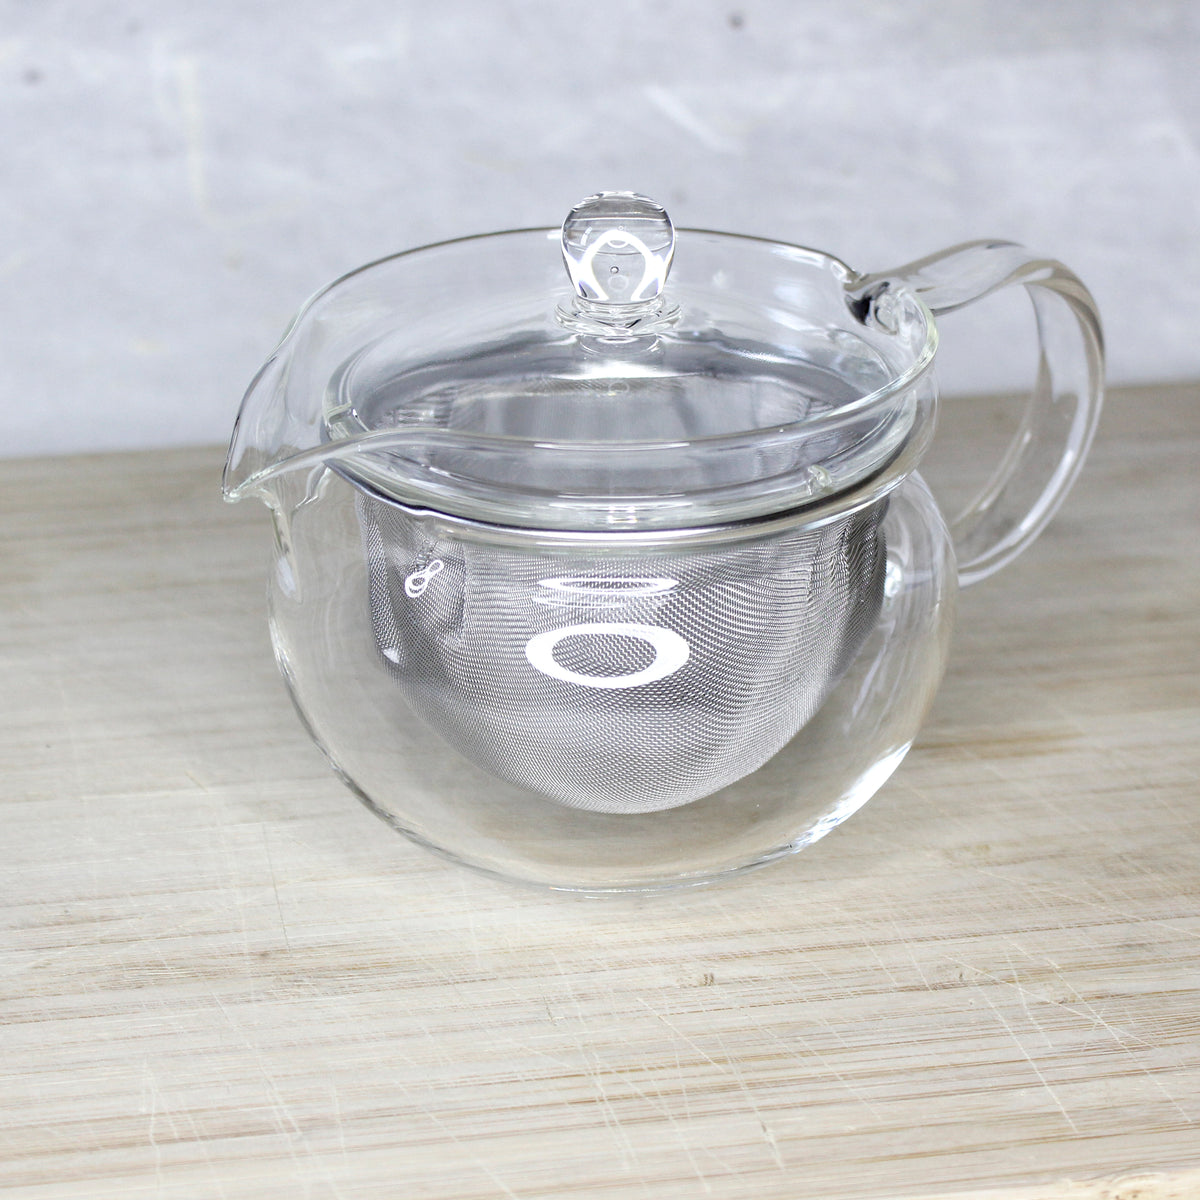 White Porcelain Teapot with Lid - 10 oz.